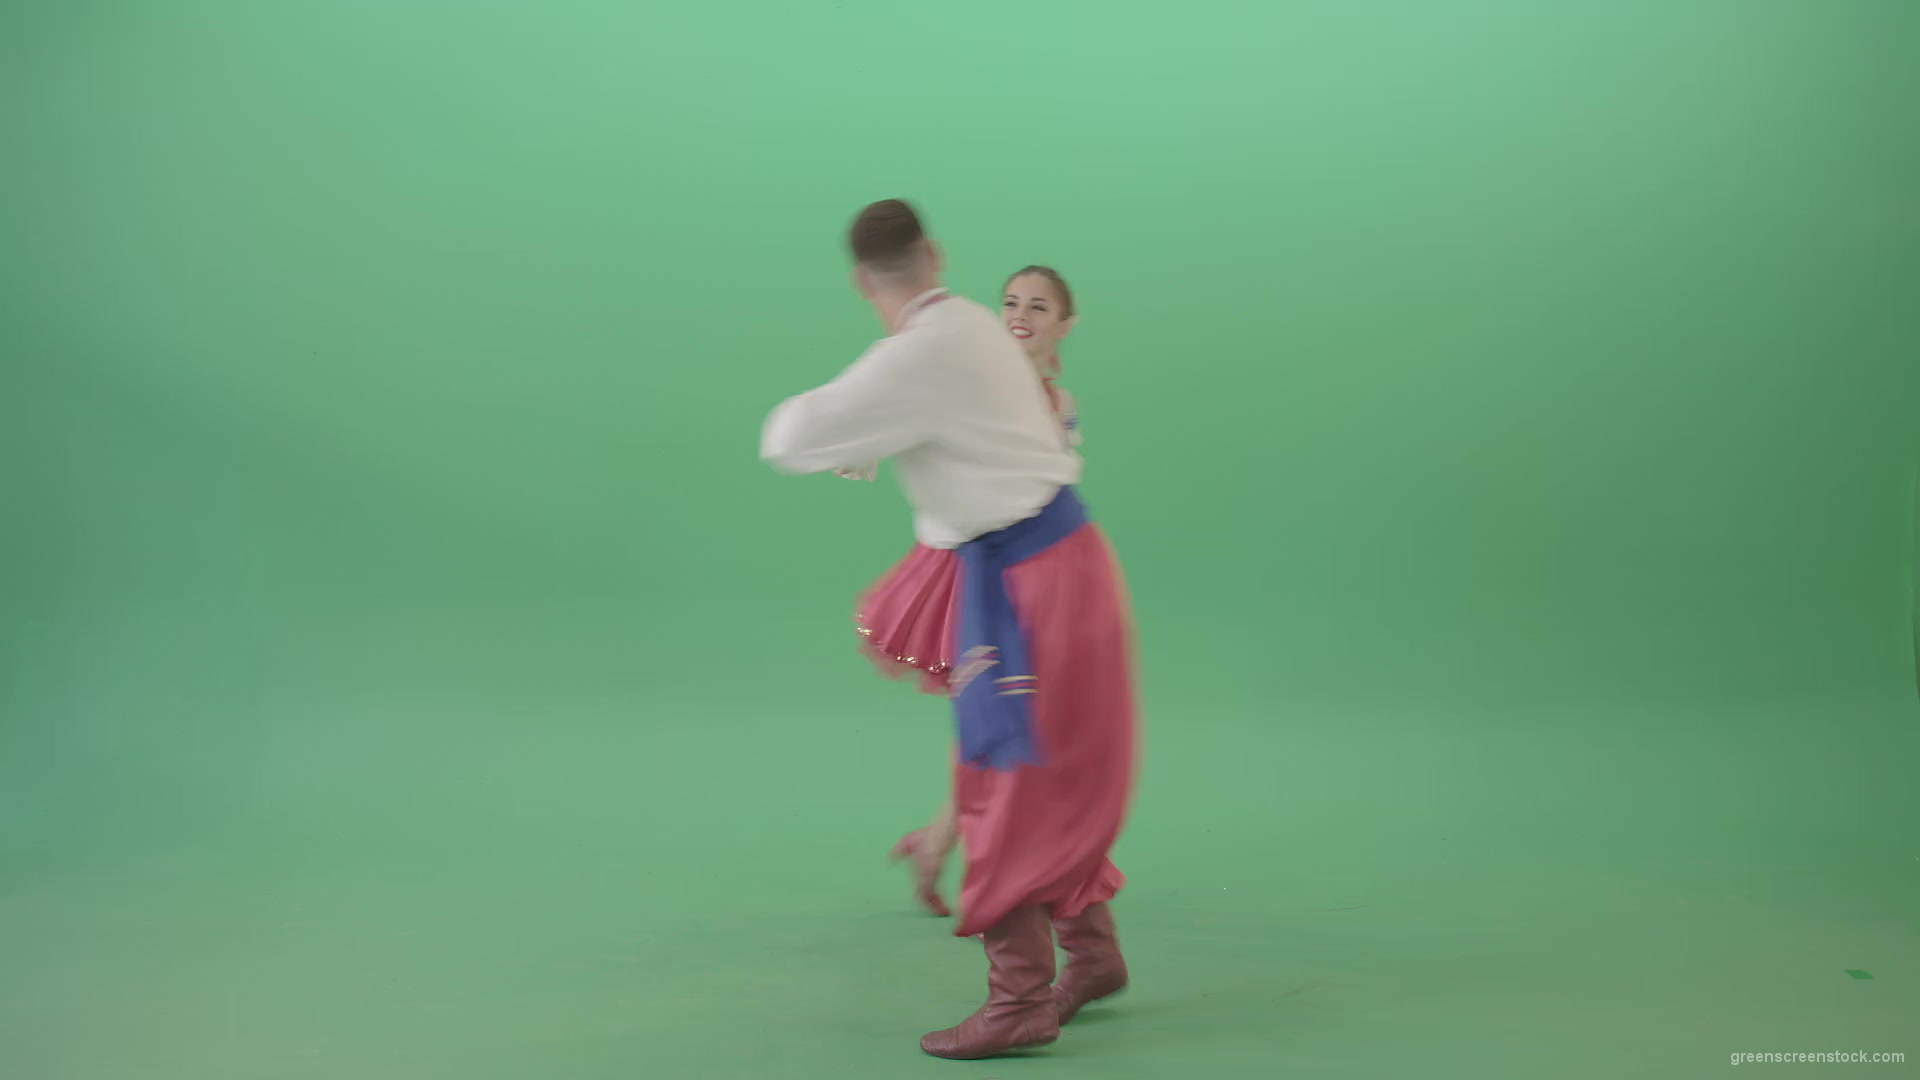 Folk-dance-Polka-in-Ukraine-national-dacing-couple-isolated-on-Green-Screen-4K-Video-Footage-1920_002 Green Screen Stock